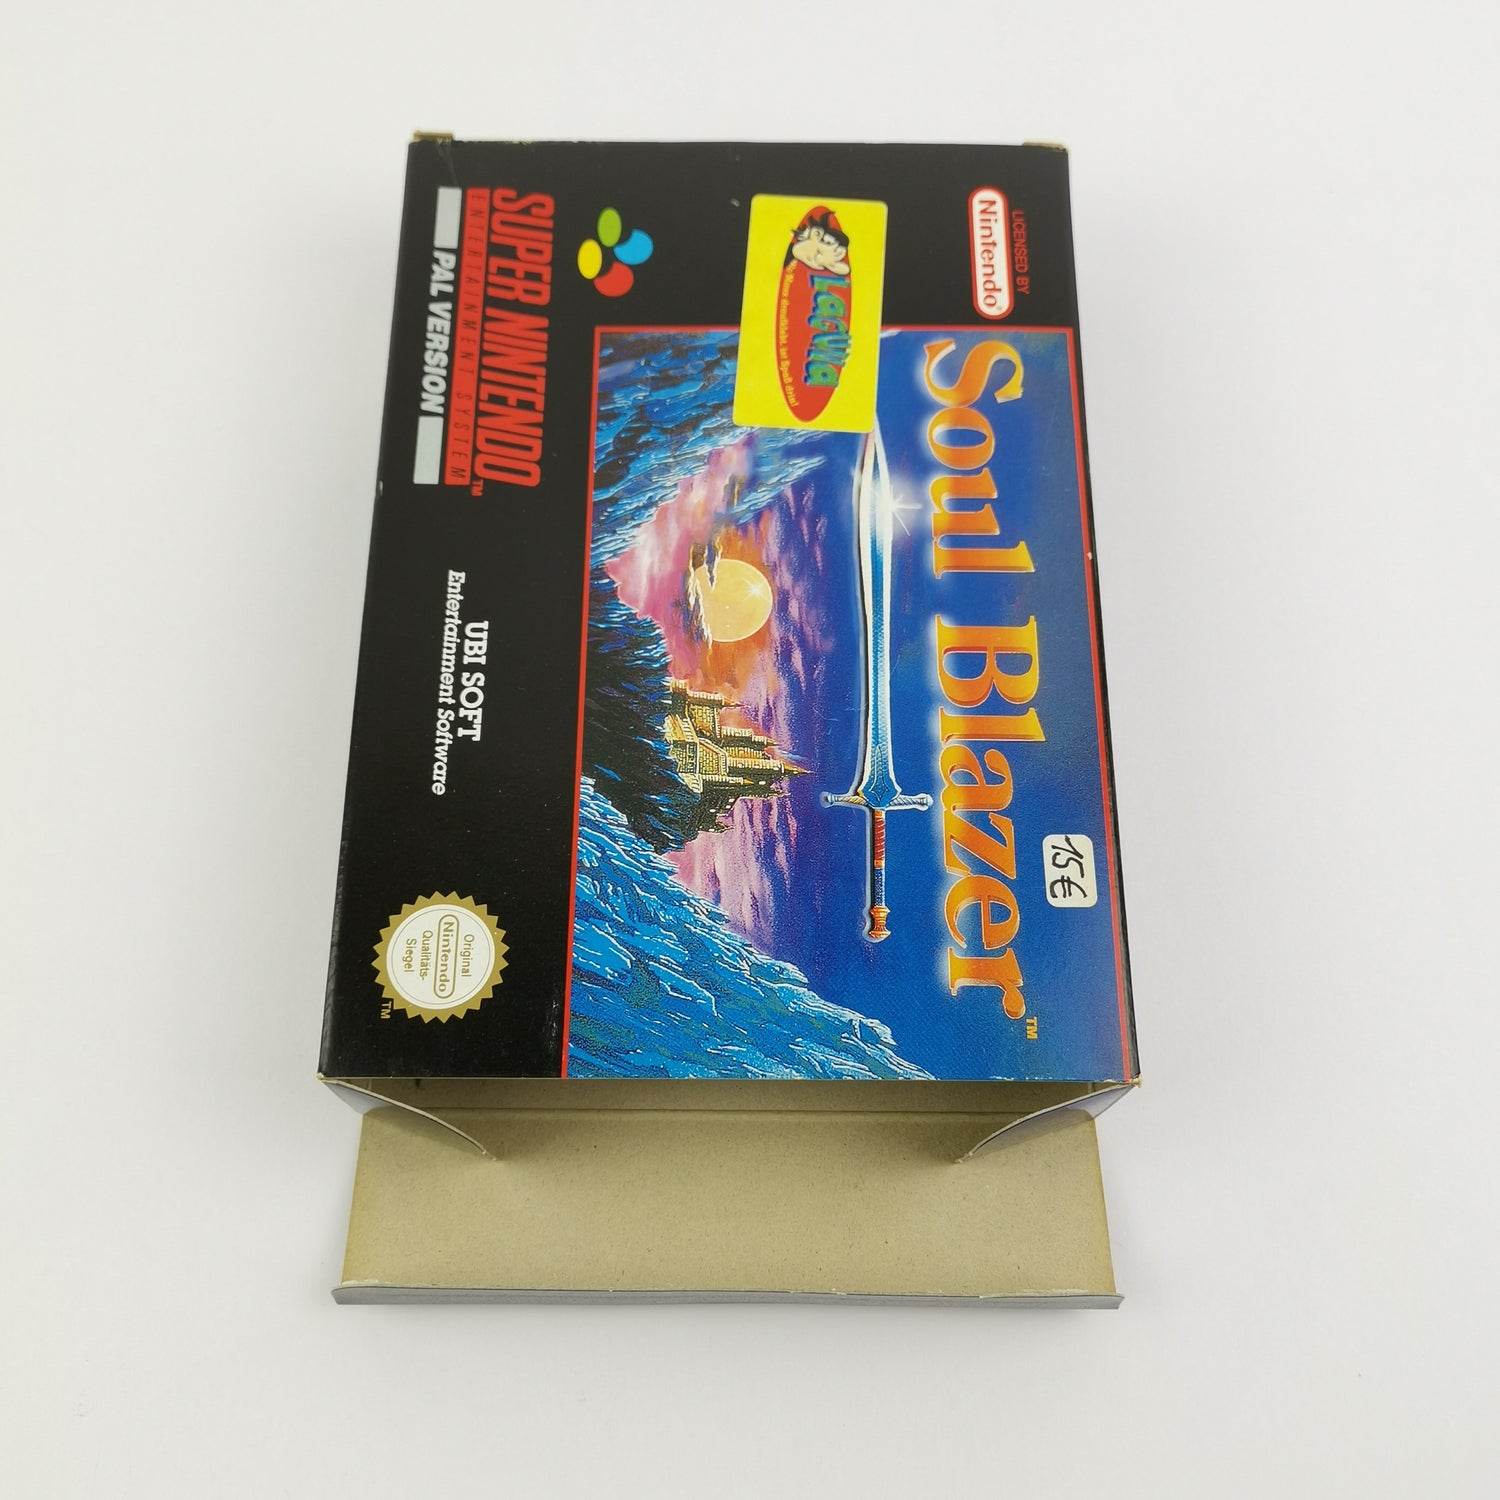 Super Nintendo Game: Soul Blazer - Original Packaging & Instructions PAL | SNES cartridge